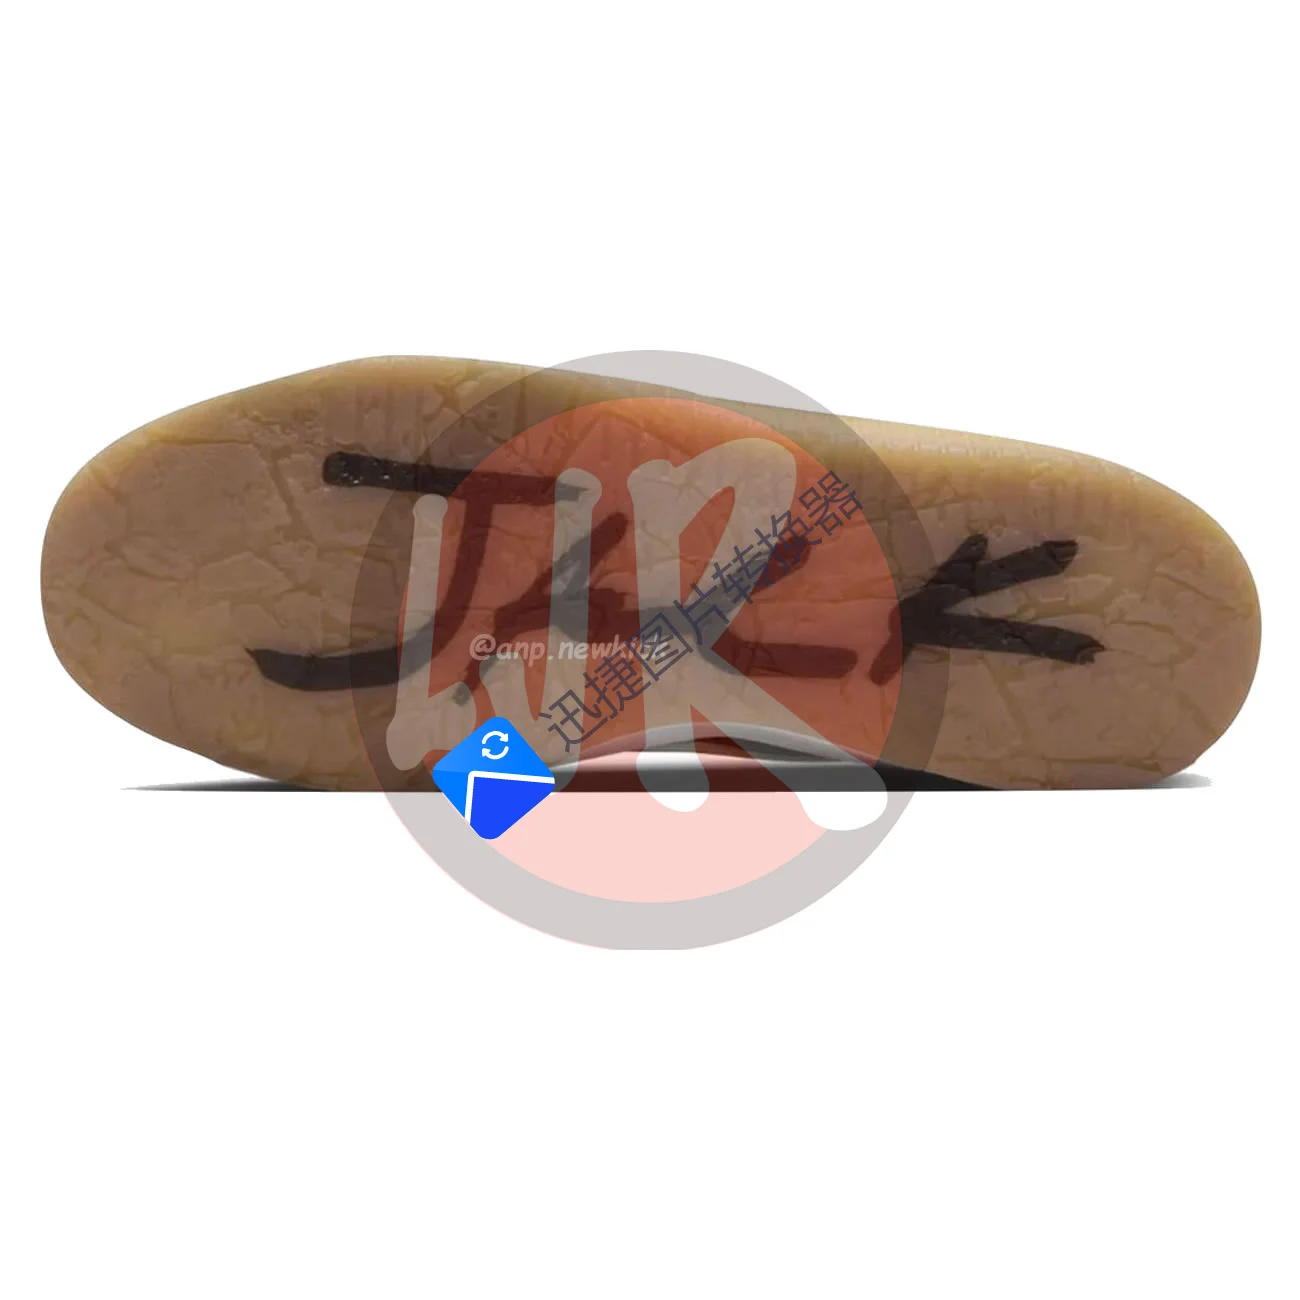 Travis Scott X Jordan Cut The Check Trainer Release Date Ljr Sneakers (19) - bc-ljr.com